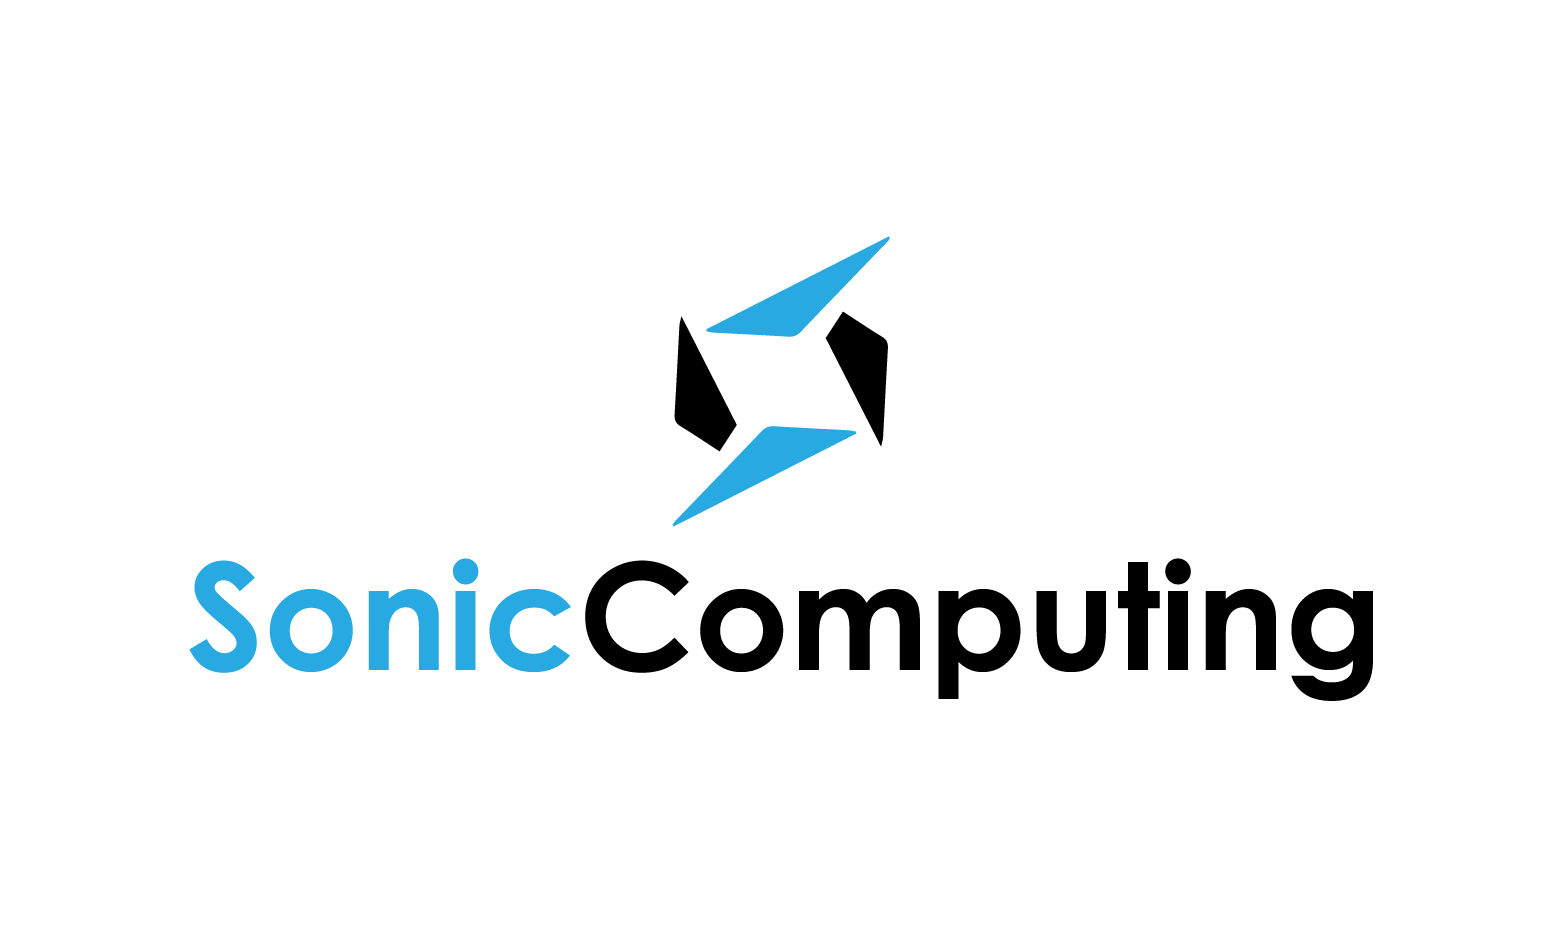 SonicComputing.com - Creative brandable domain for sale